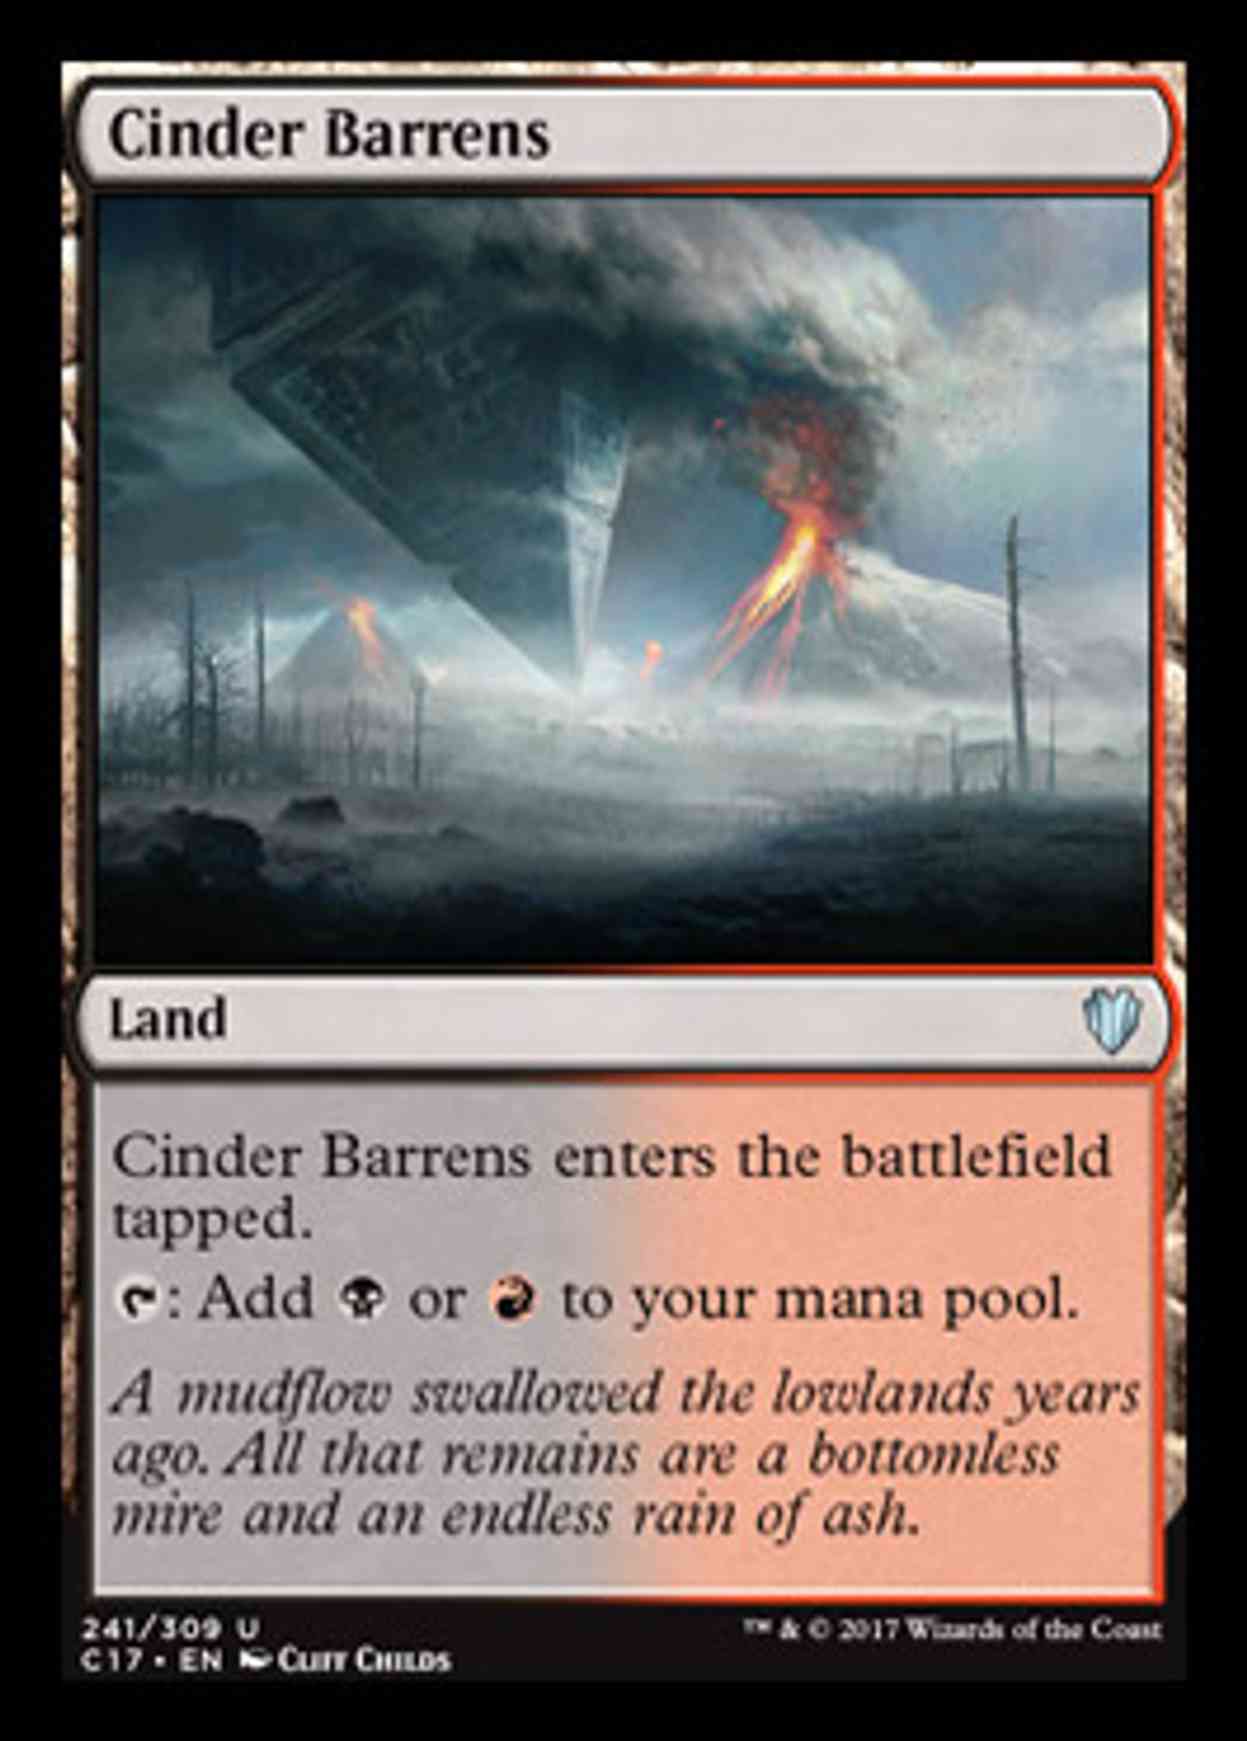 Cinder Barrens magic card front